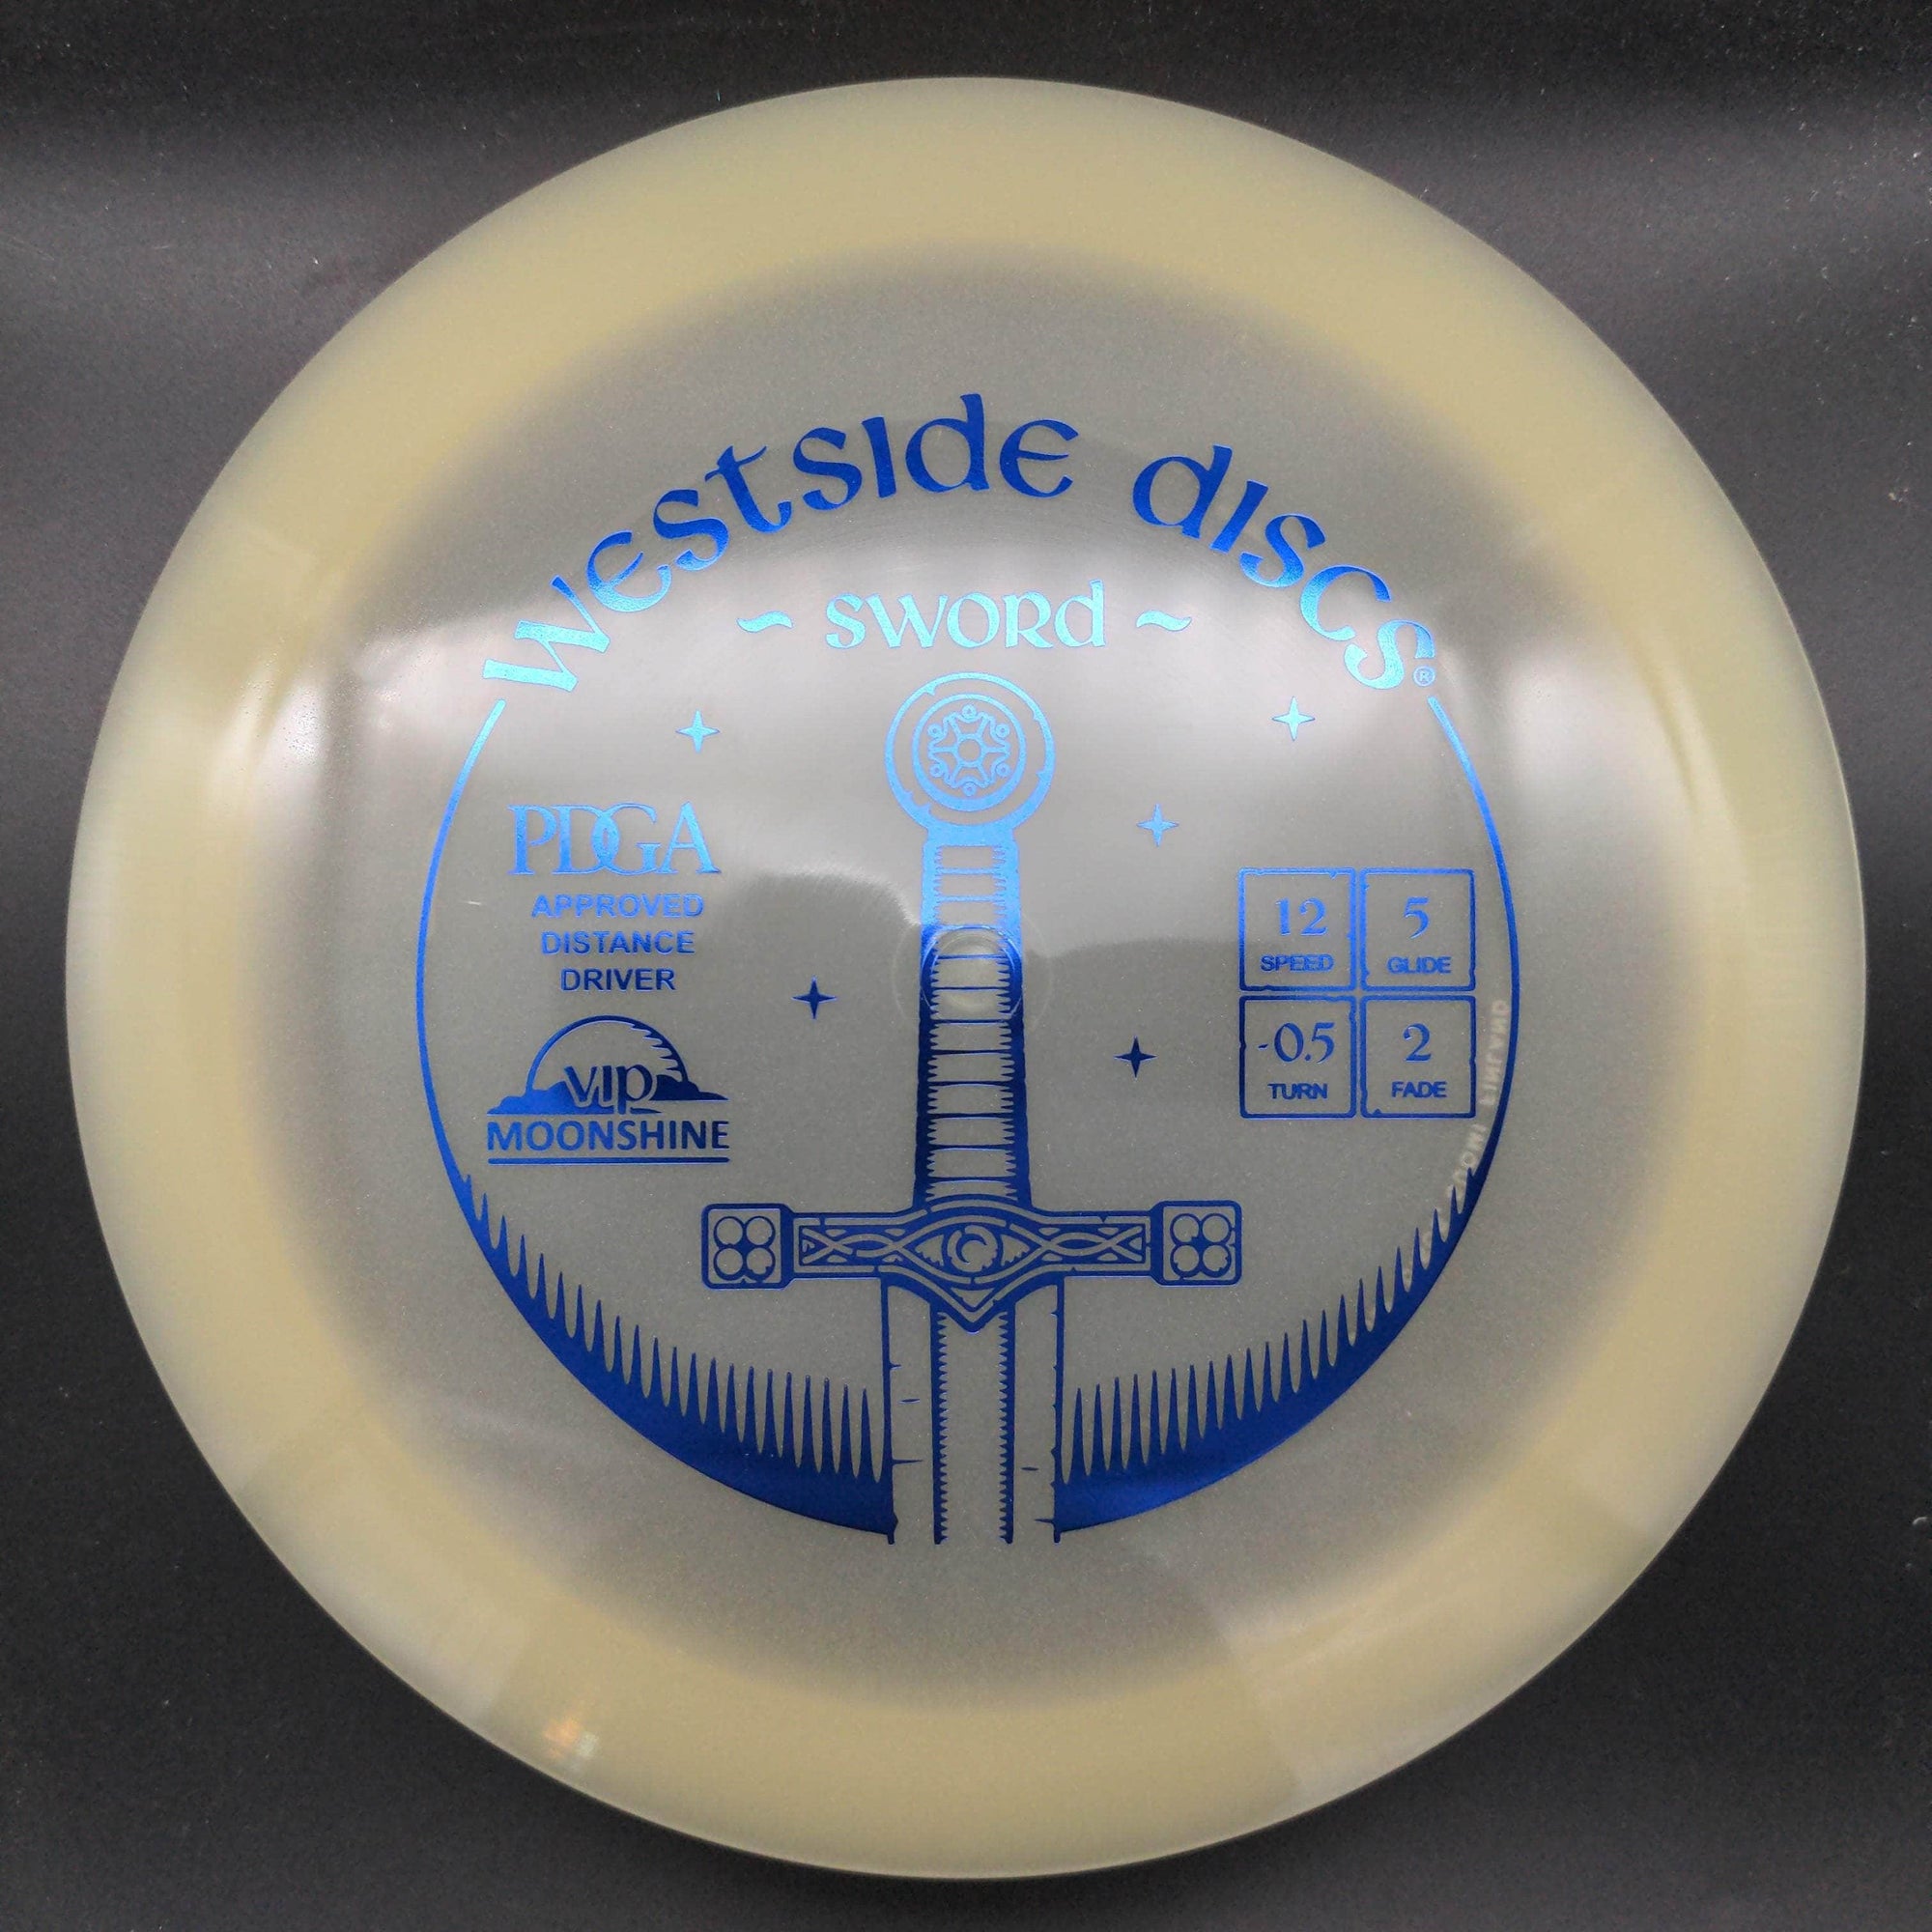 Westside Discs Distance Driver Glow Blue Stamp 174g 2 Sword, VIP Moonshine Plastic